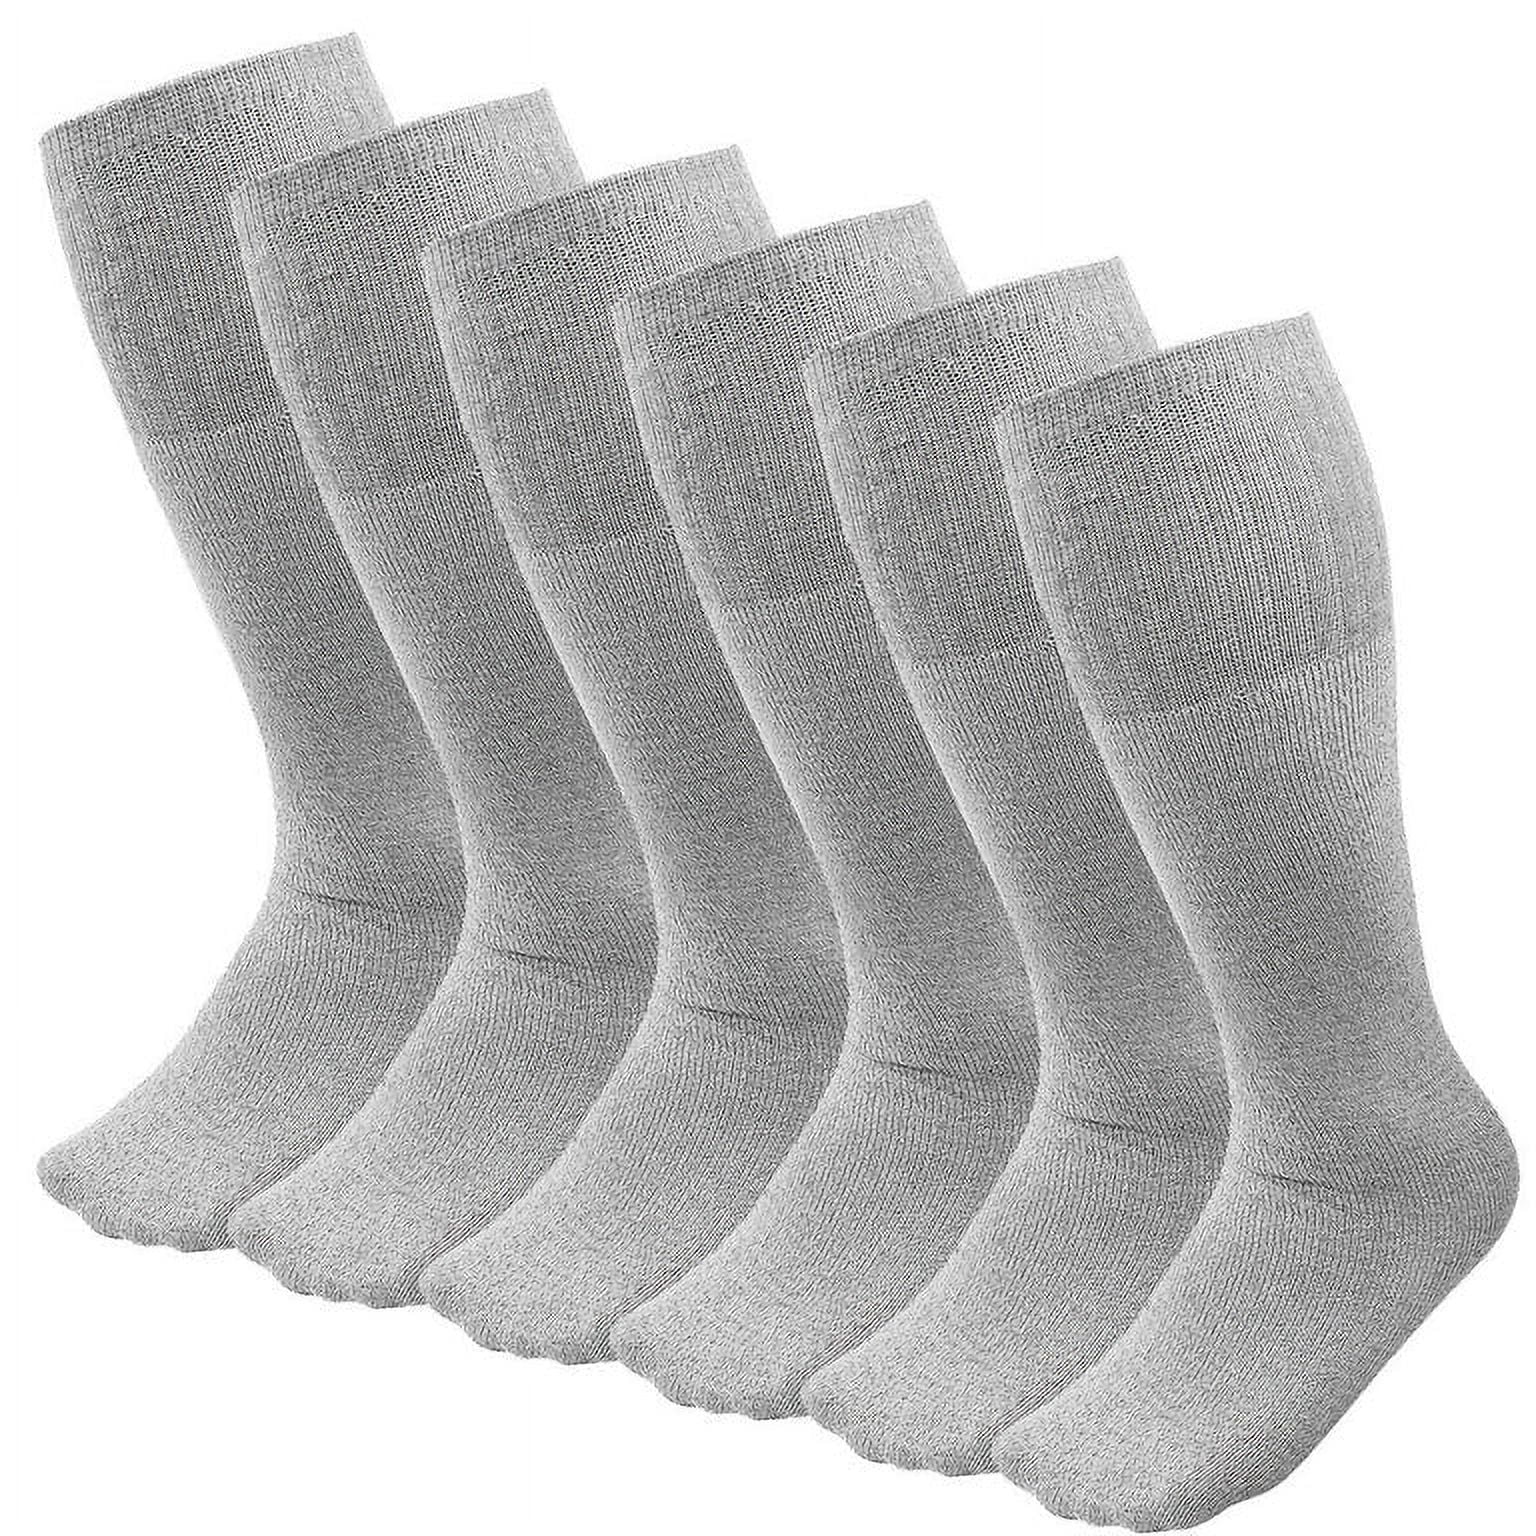 Diamond Star Tube Socks Men 6 Pairs Premium Cushion Cotton Over The ...